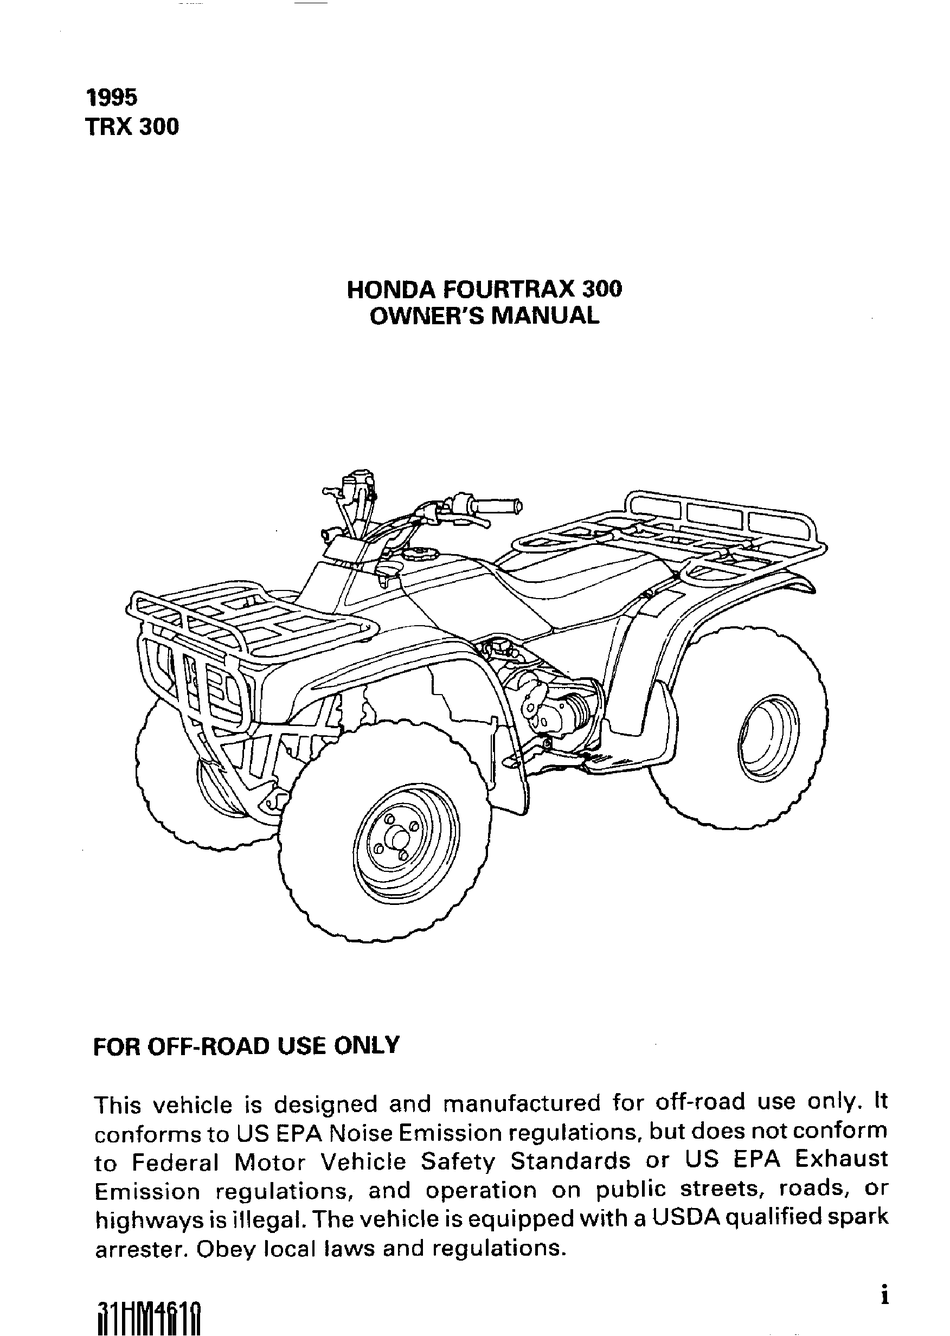 Wiring Diagram Honda Fourtrax 300